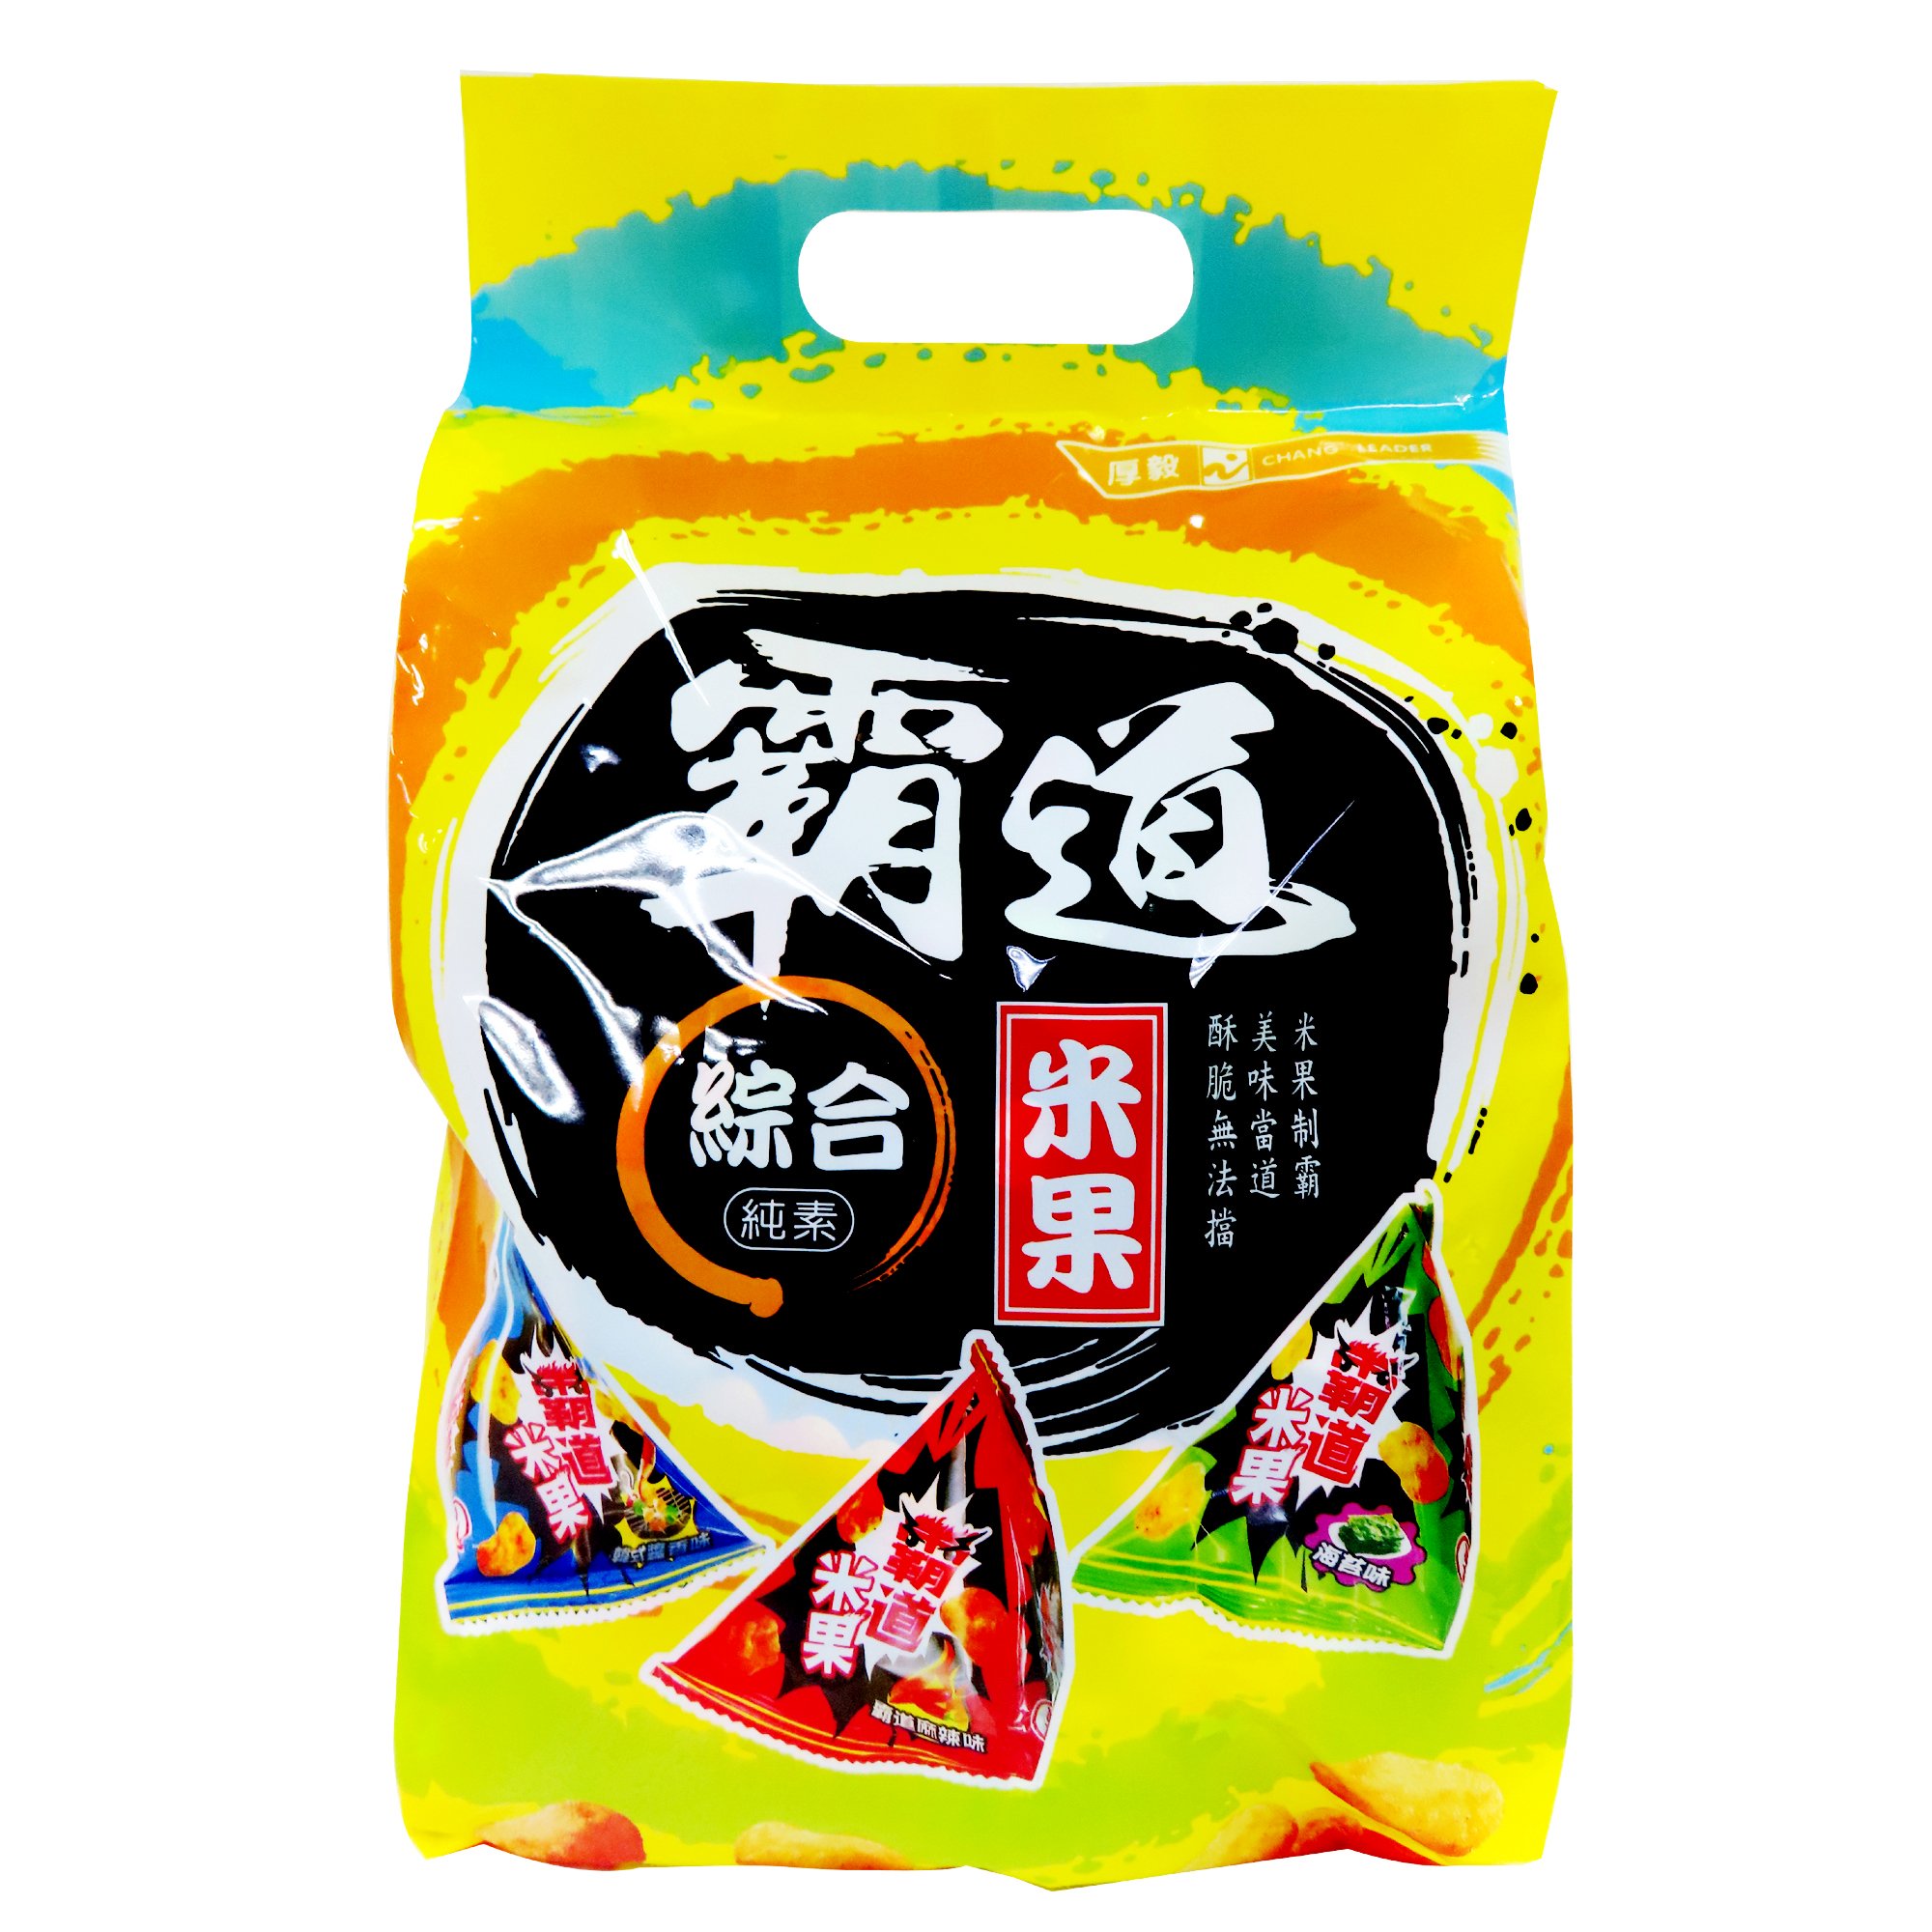 Image Multi Rice Crackers 霸道综合米果 450grams